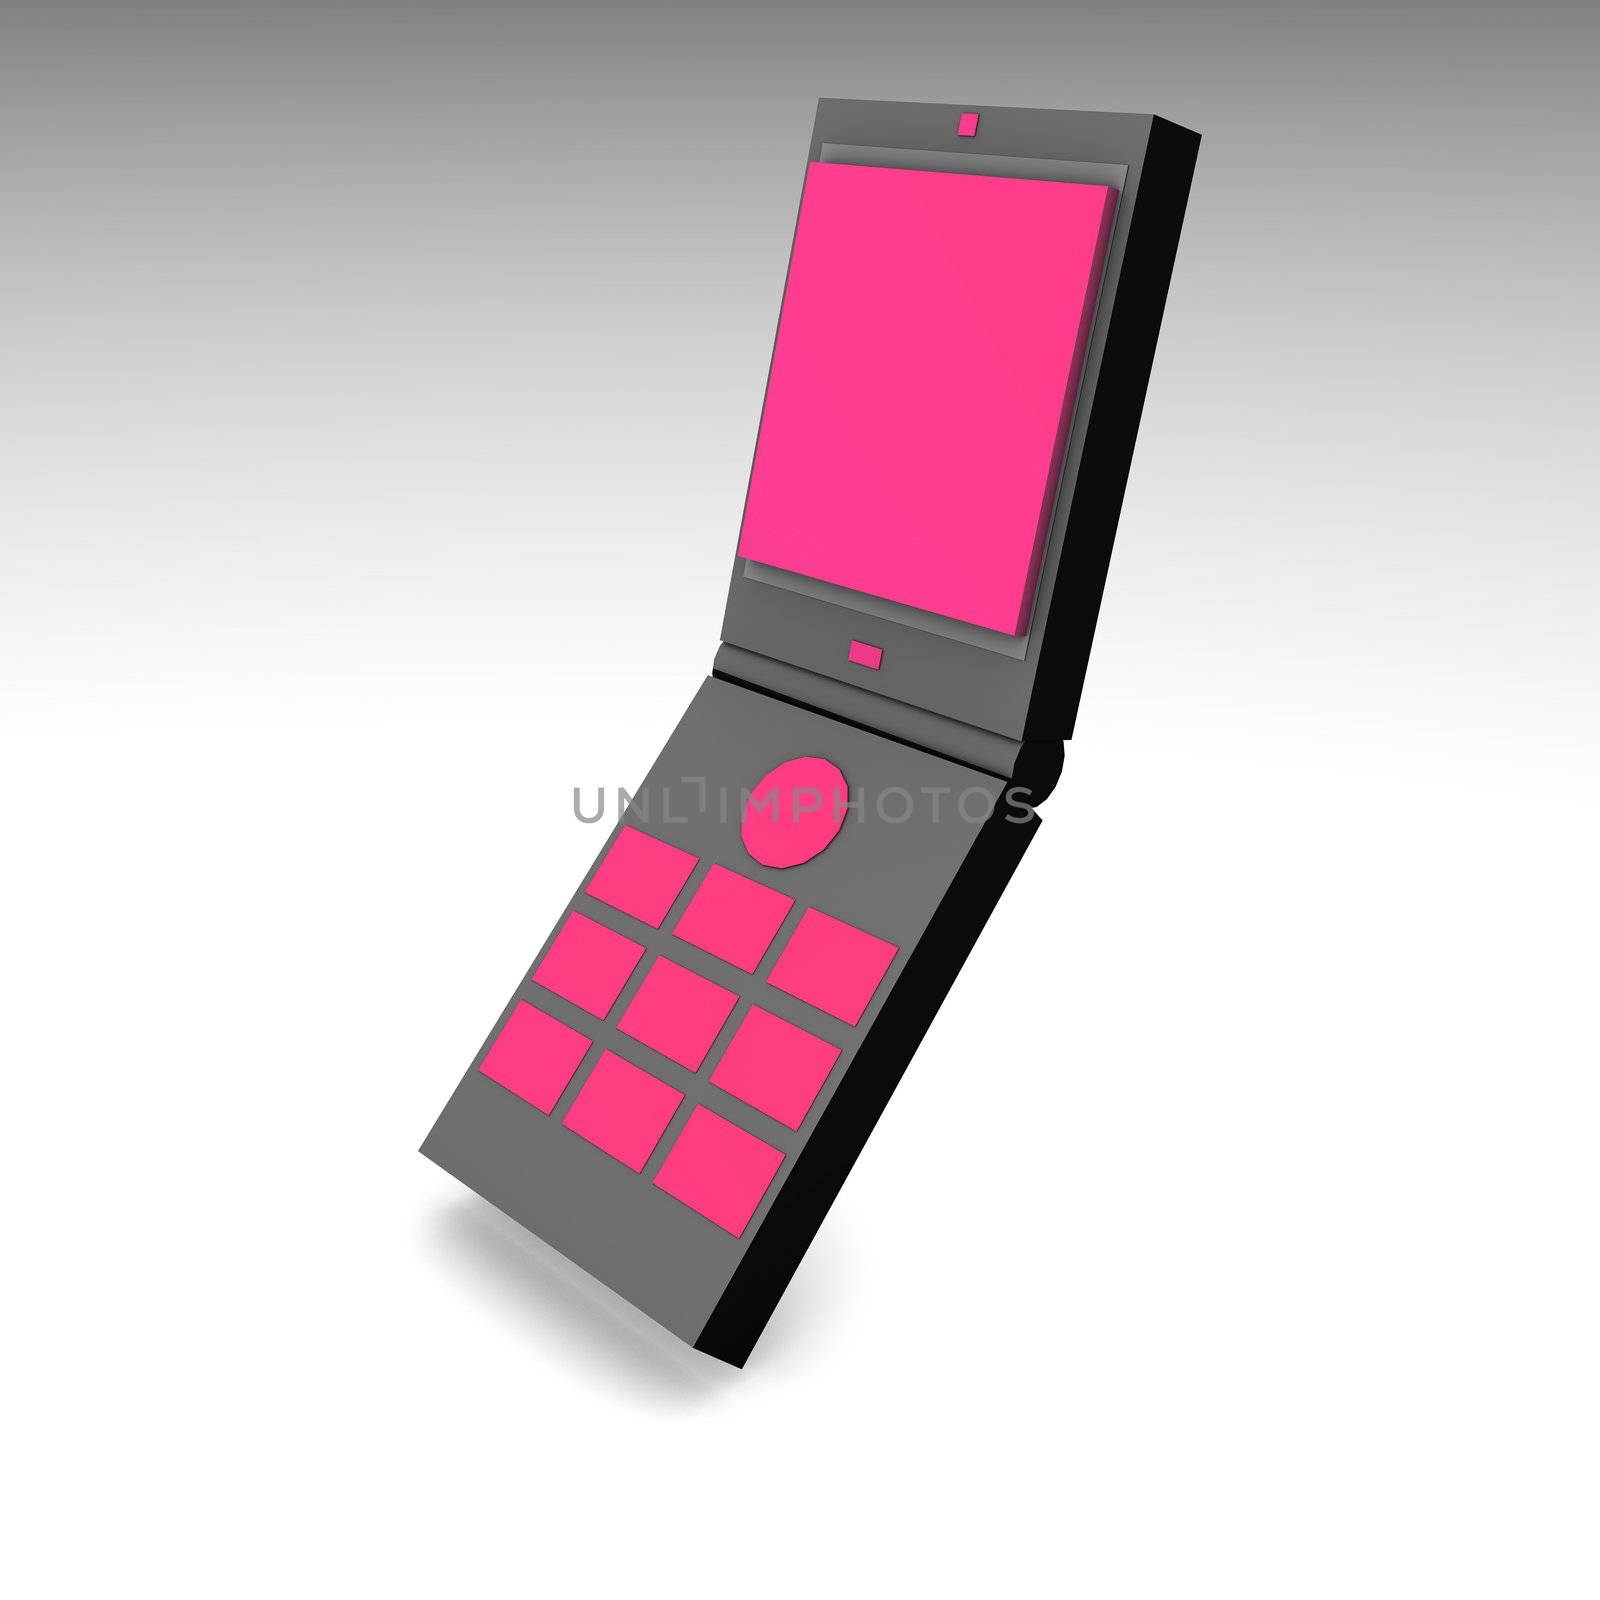 Mobile Phone by kentoh